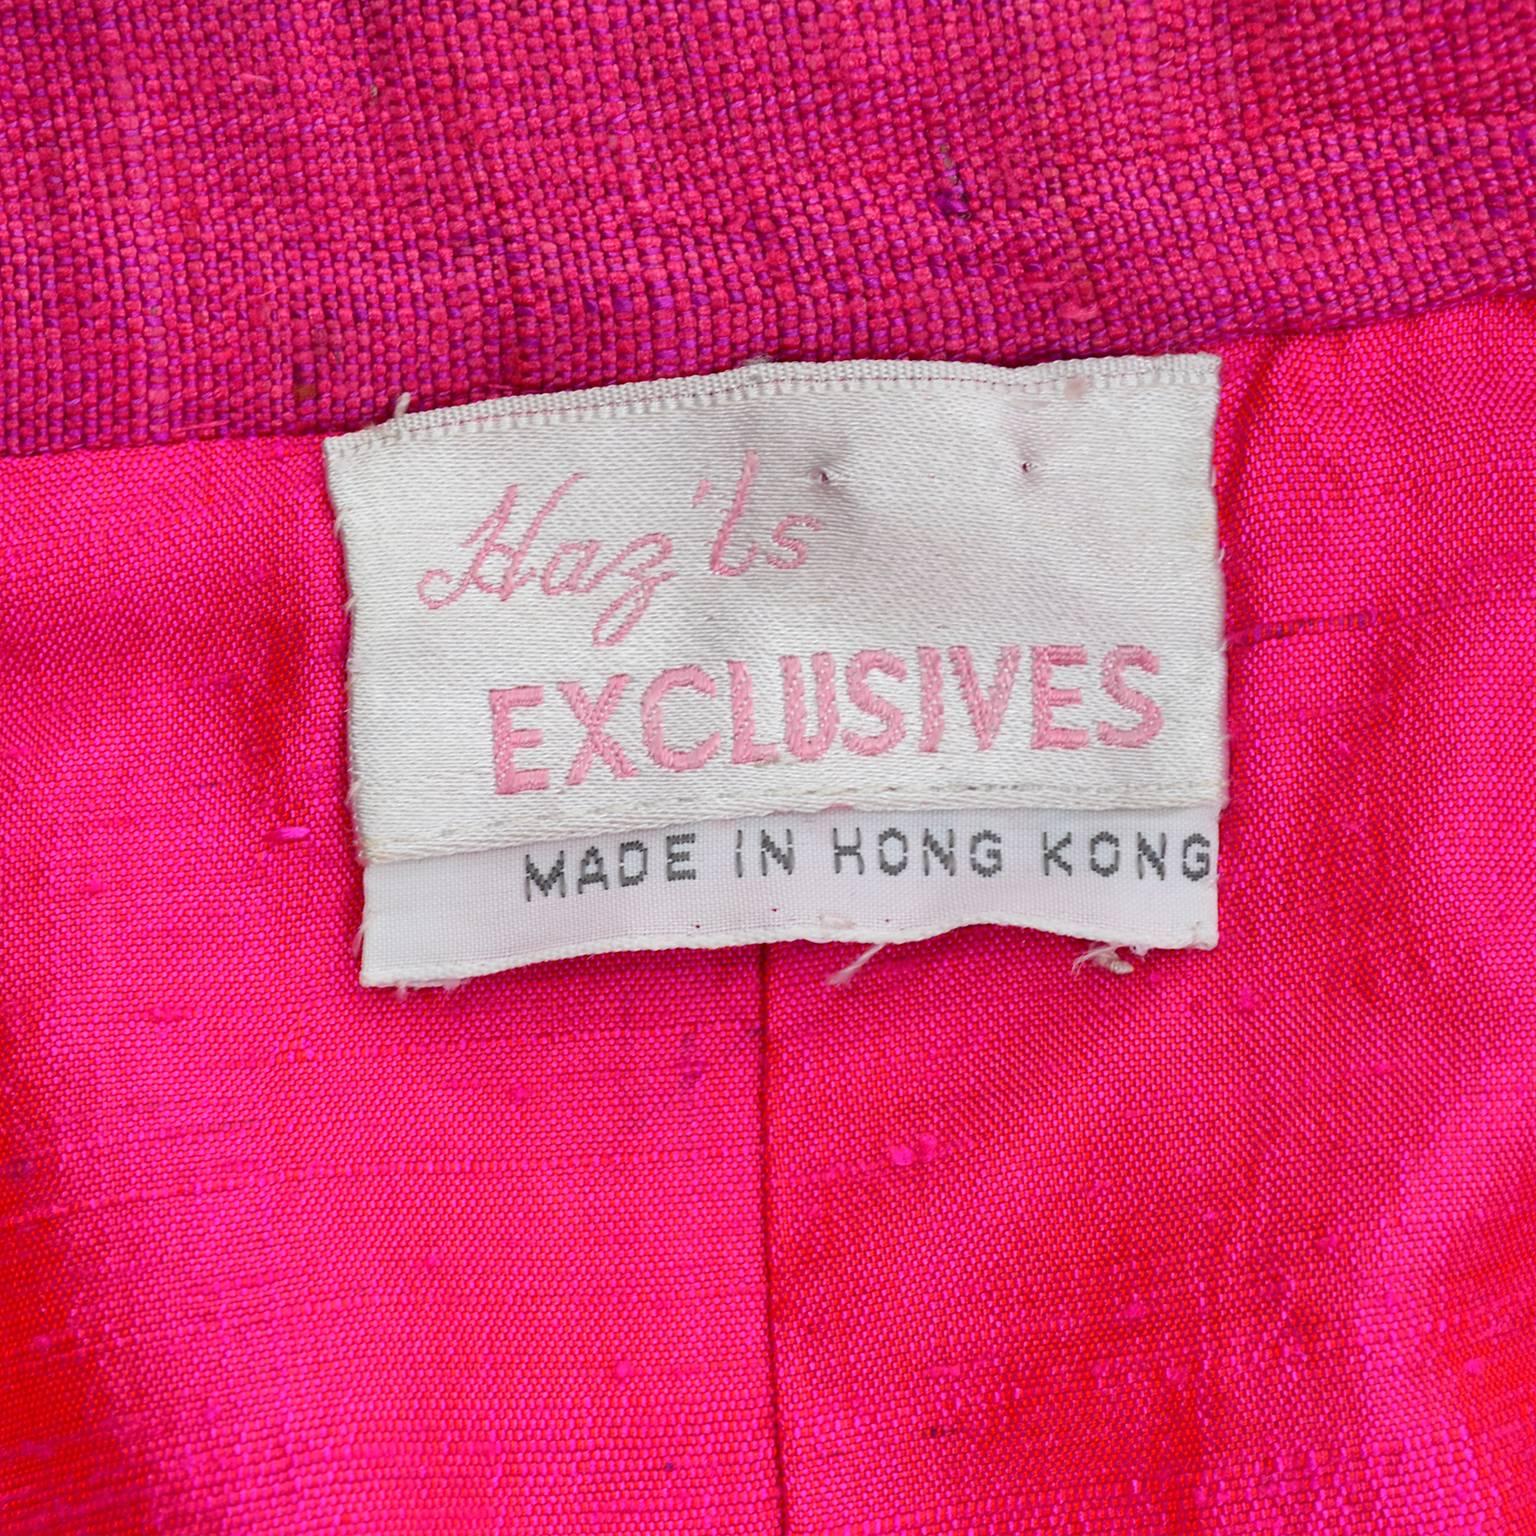 1960s Pink Silk Vintage Evening Coat Haz'ls Exclusives Made in Hong Kong 1